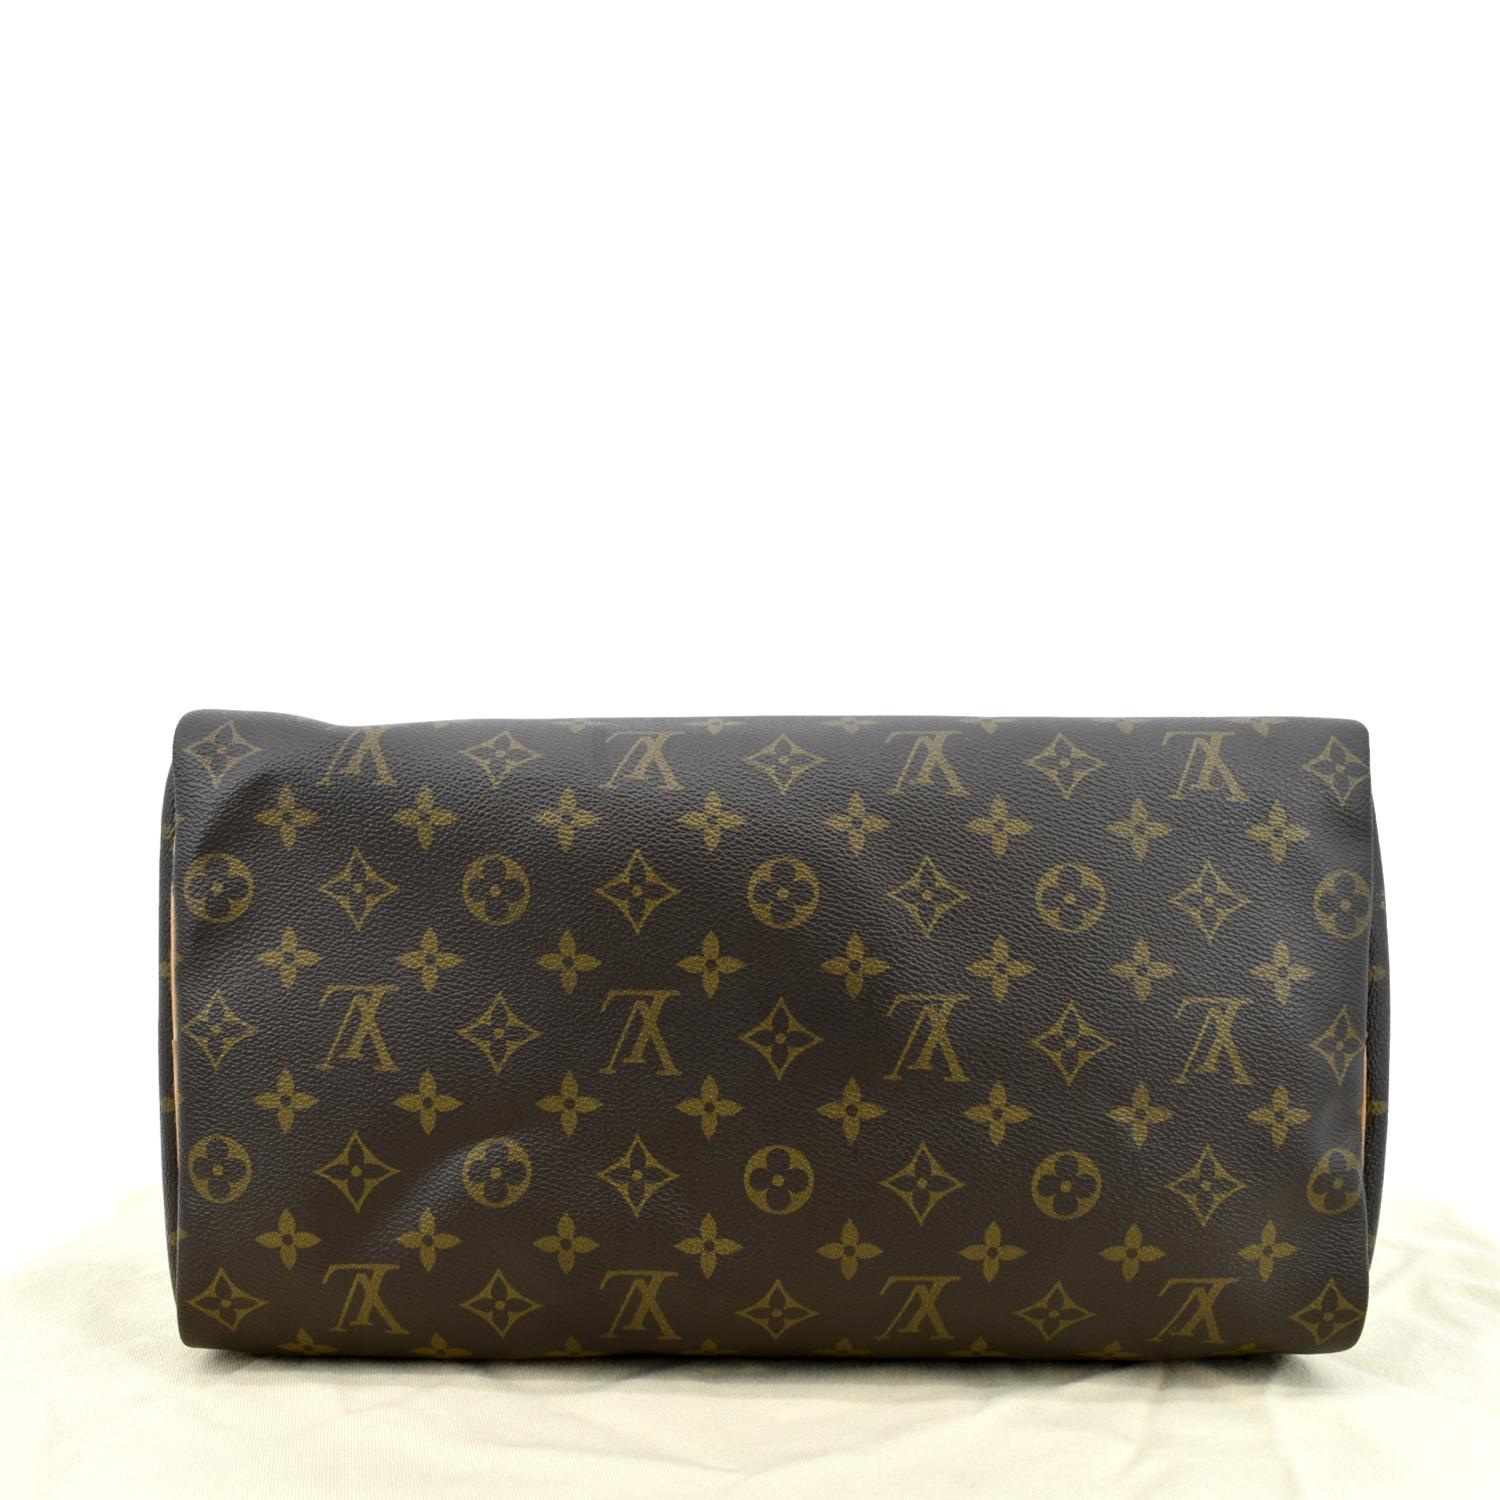 Authenticated used Louis Vuitton Monogram Speedy 35 M41524 Handbag, Adult Unisex, Size: (HxWxD): 21cm x 35cm x 18cm / 8.26'' x 13.77'' x 7.08